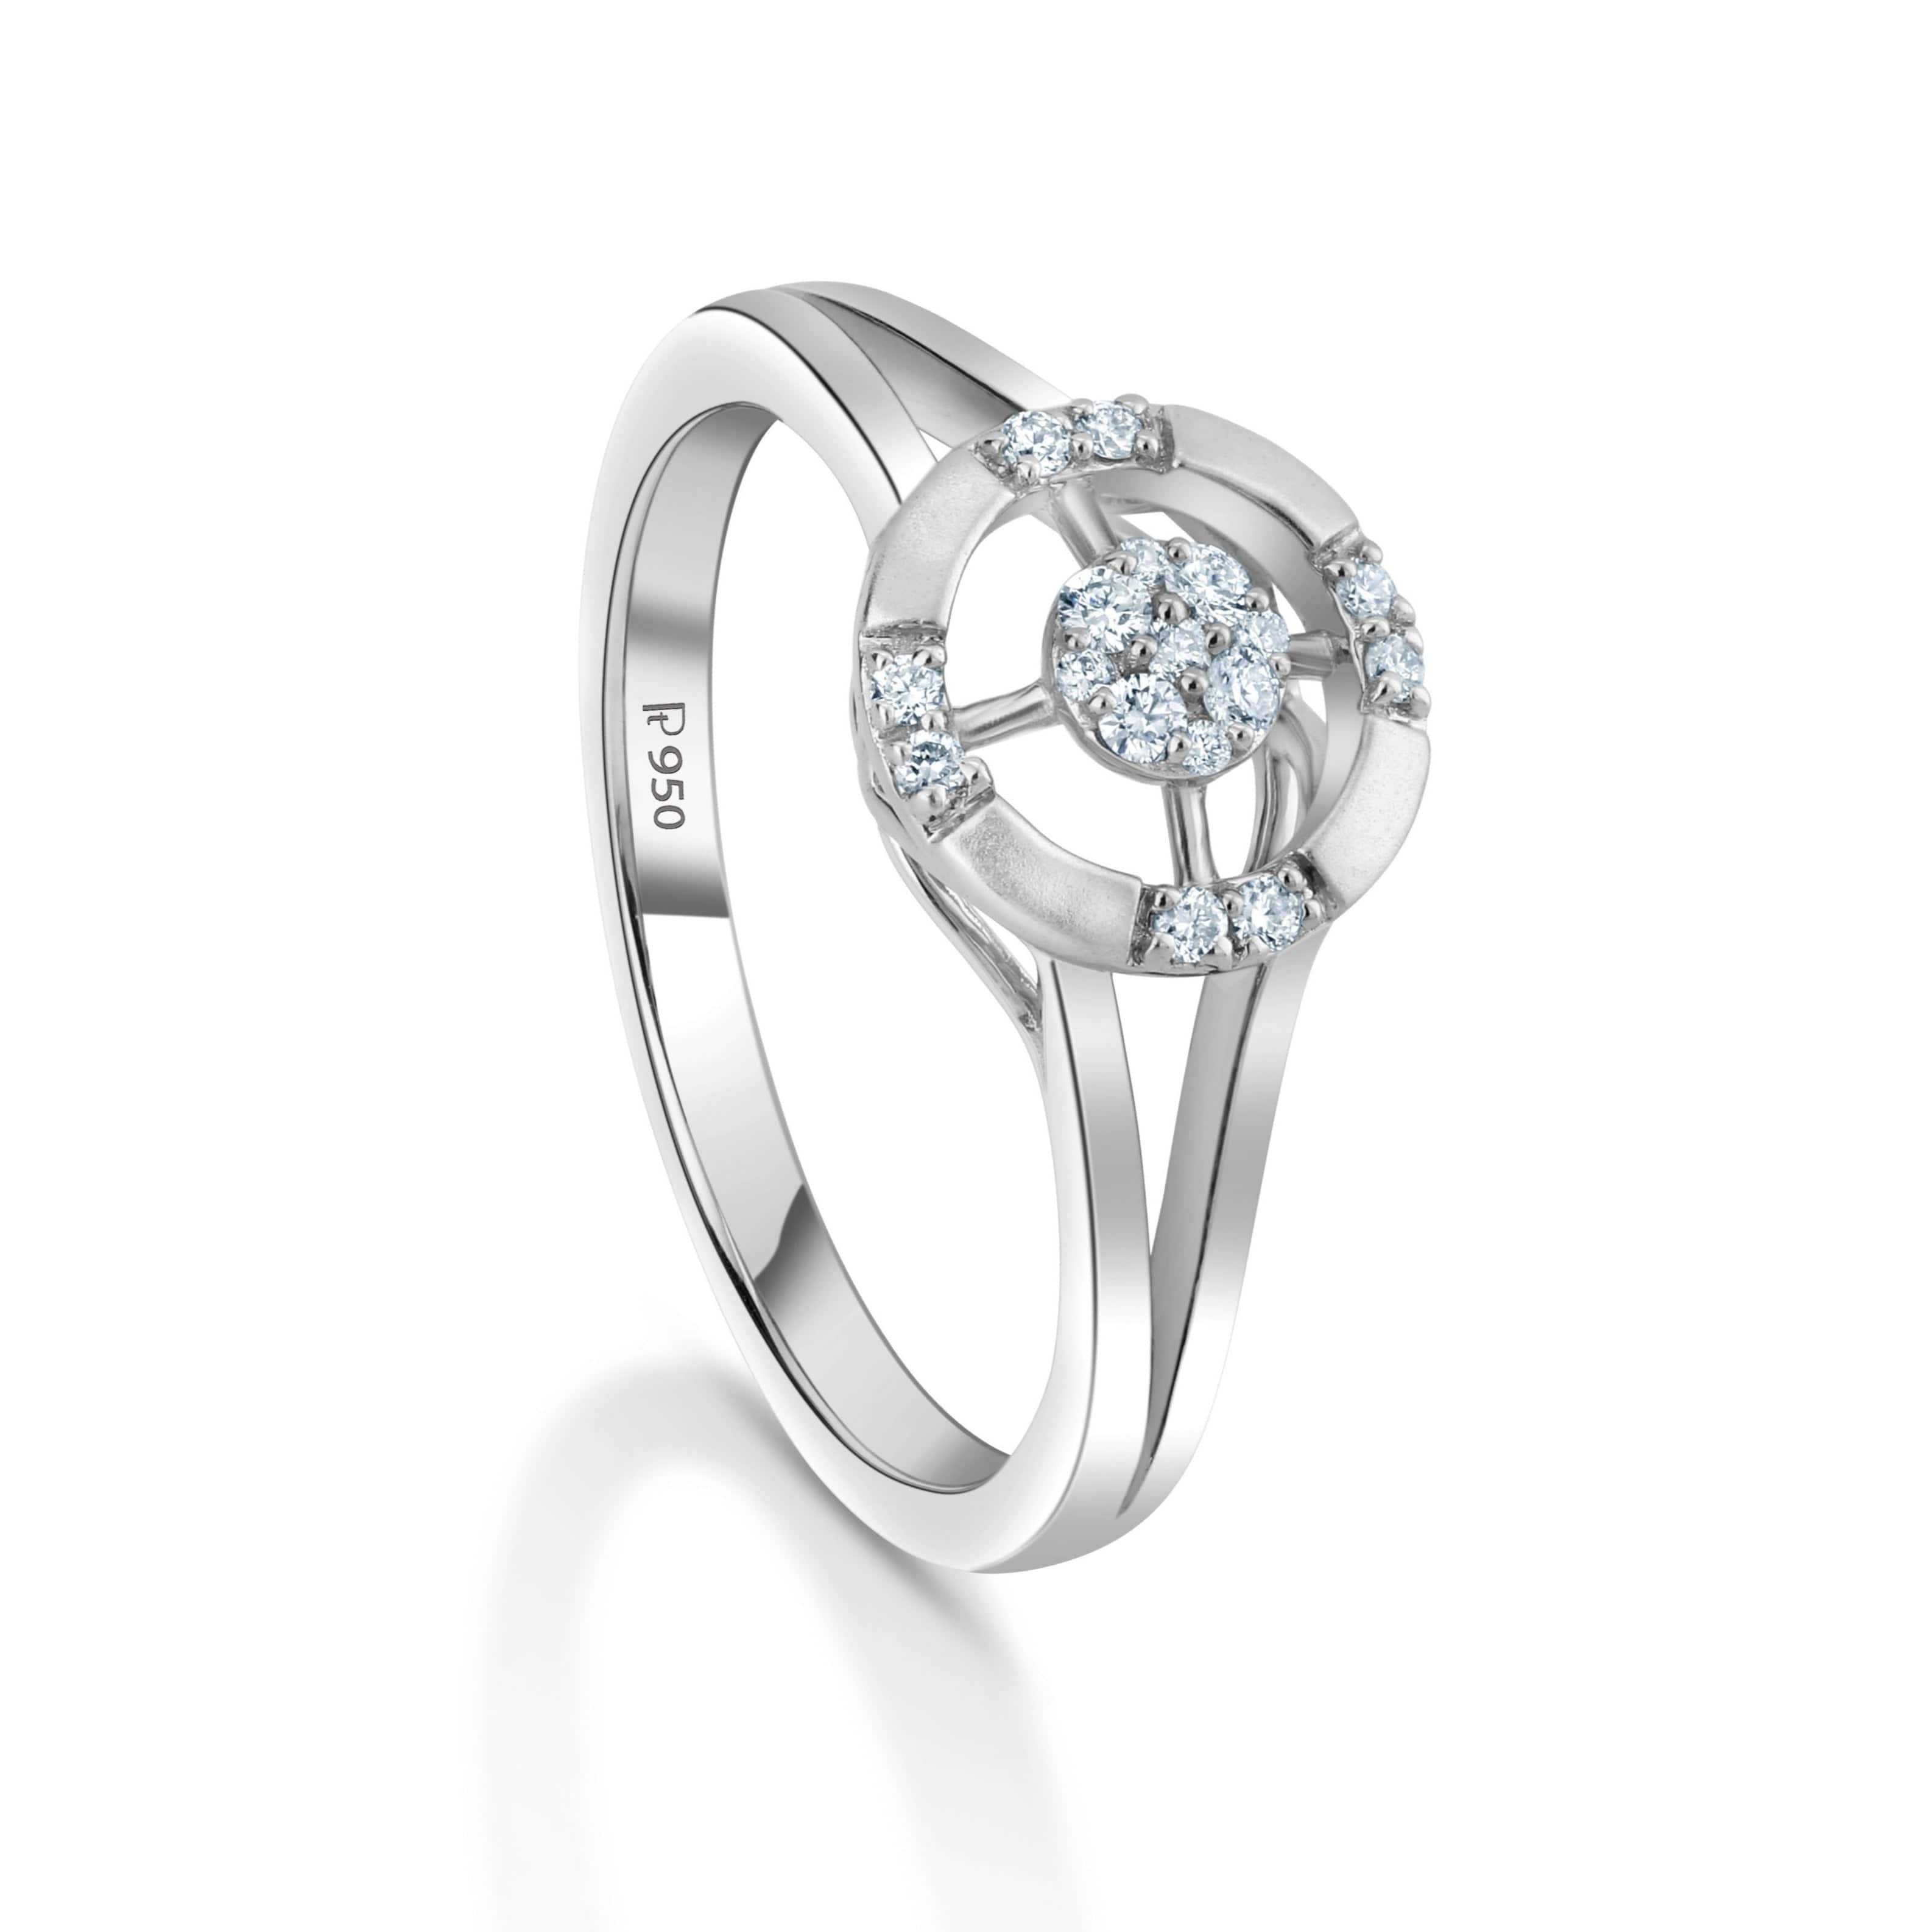 Buy Women's Platinum Rings- Platinum Evara Rings Price in India | Platinum  jewelry, Rings for her, Platinum ring